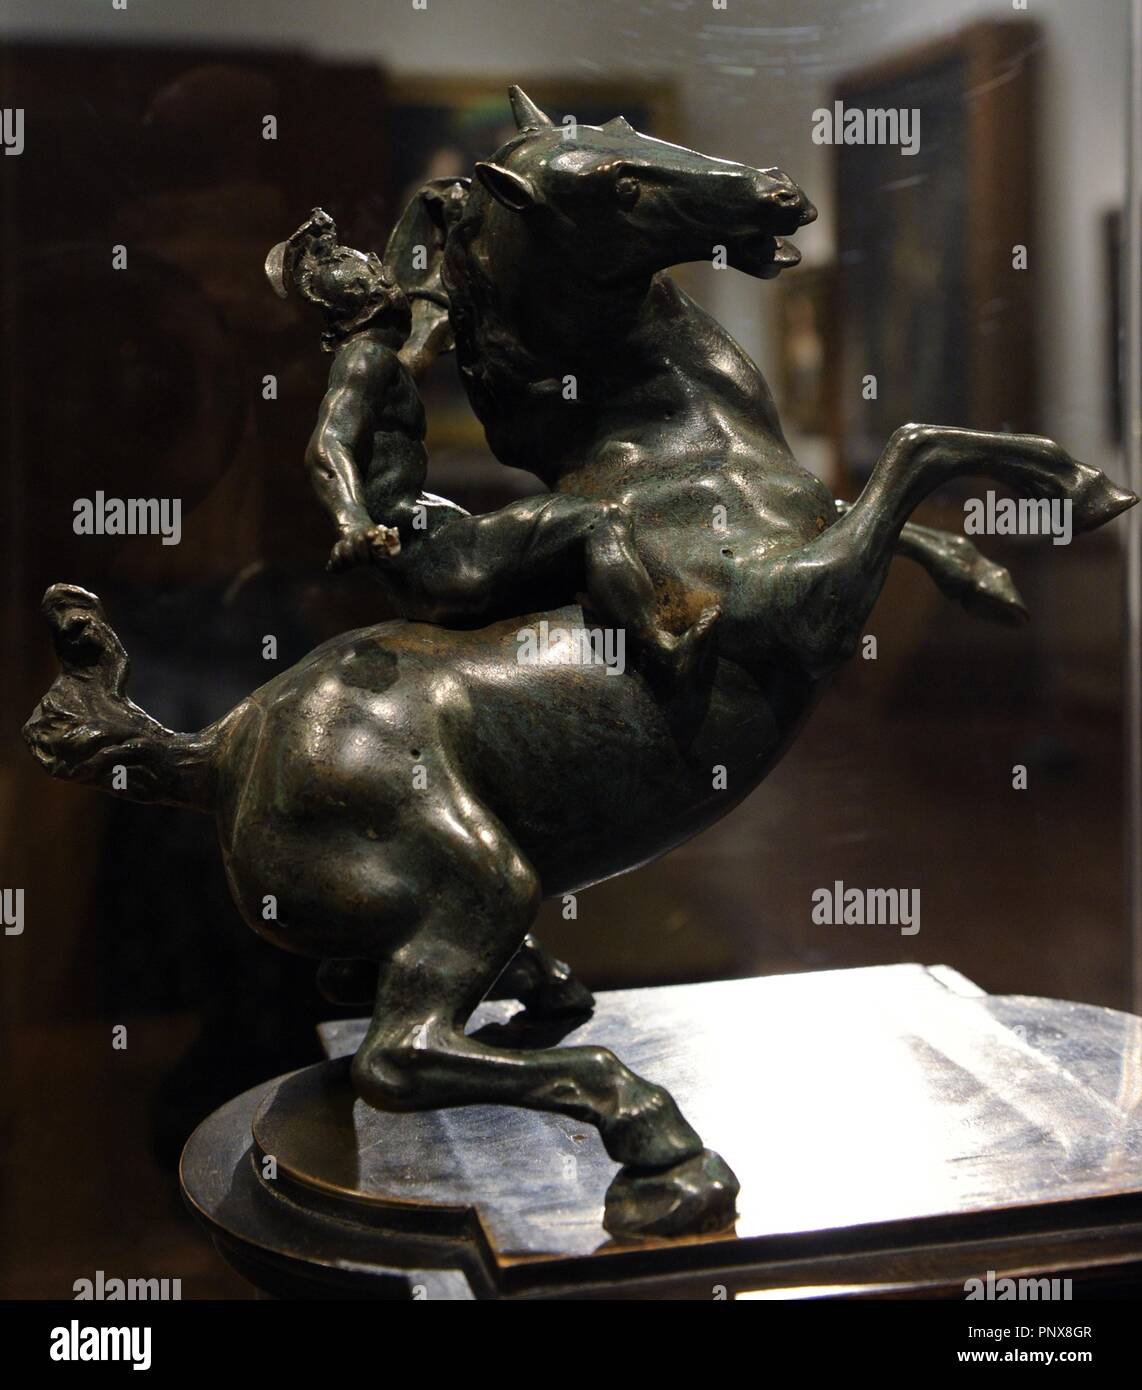 The Rearing Horse and Mounted Warrior. 16th century. Bronze. Attributed to Leonardo da Vinci (1452-1519). Italian Renaissance polymath. Museum of Fine Arts. Budapest. Hungary. Stock Photo